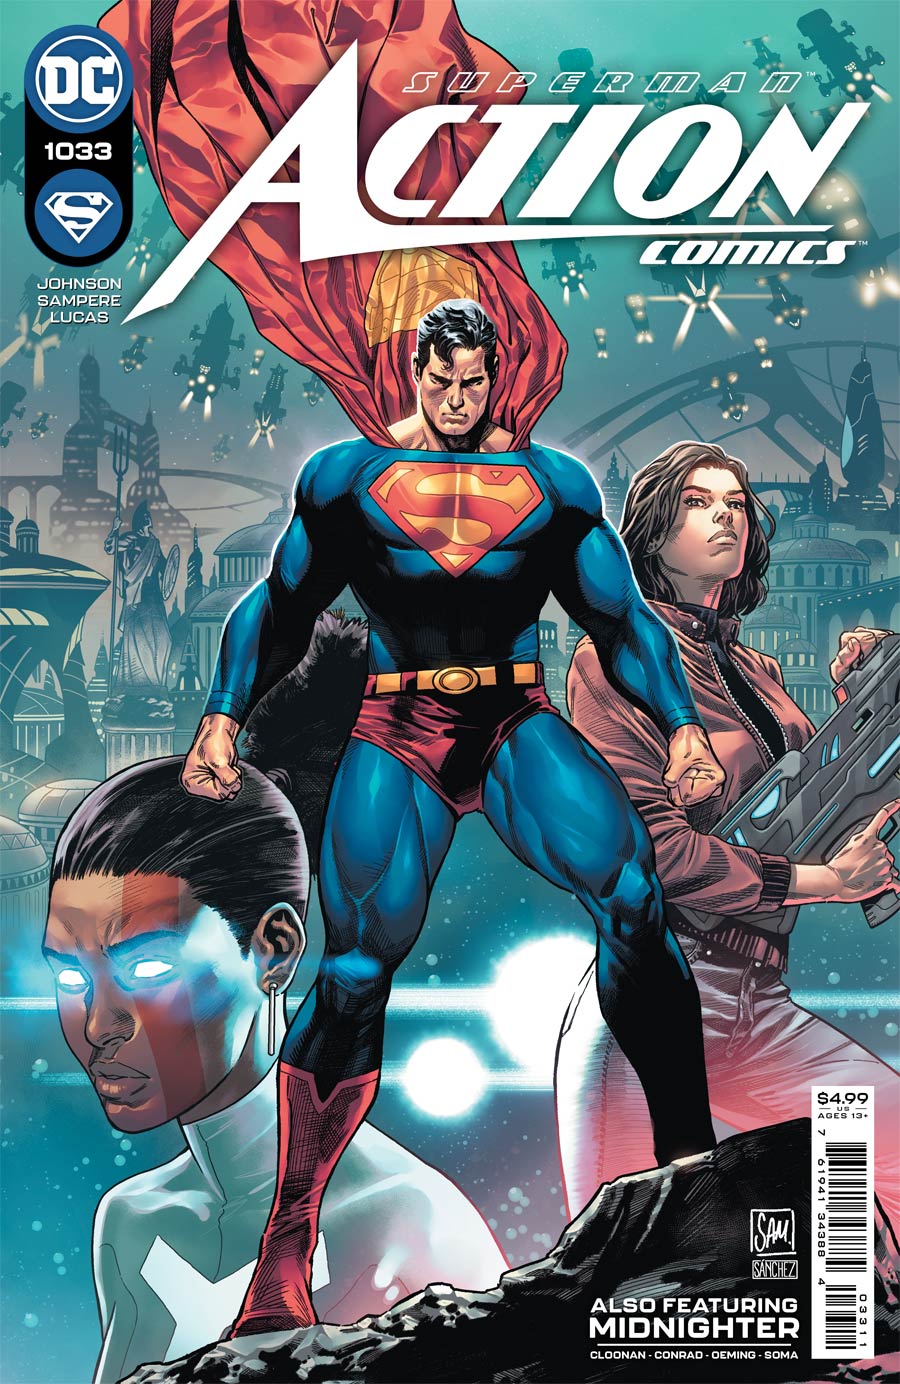 Action Comics #1033